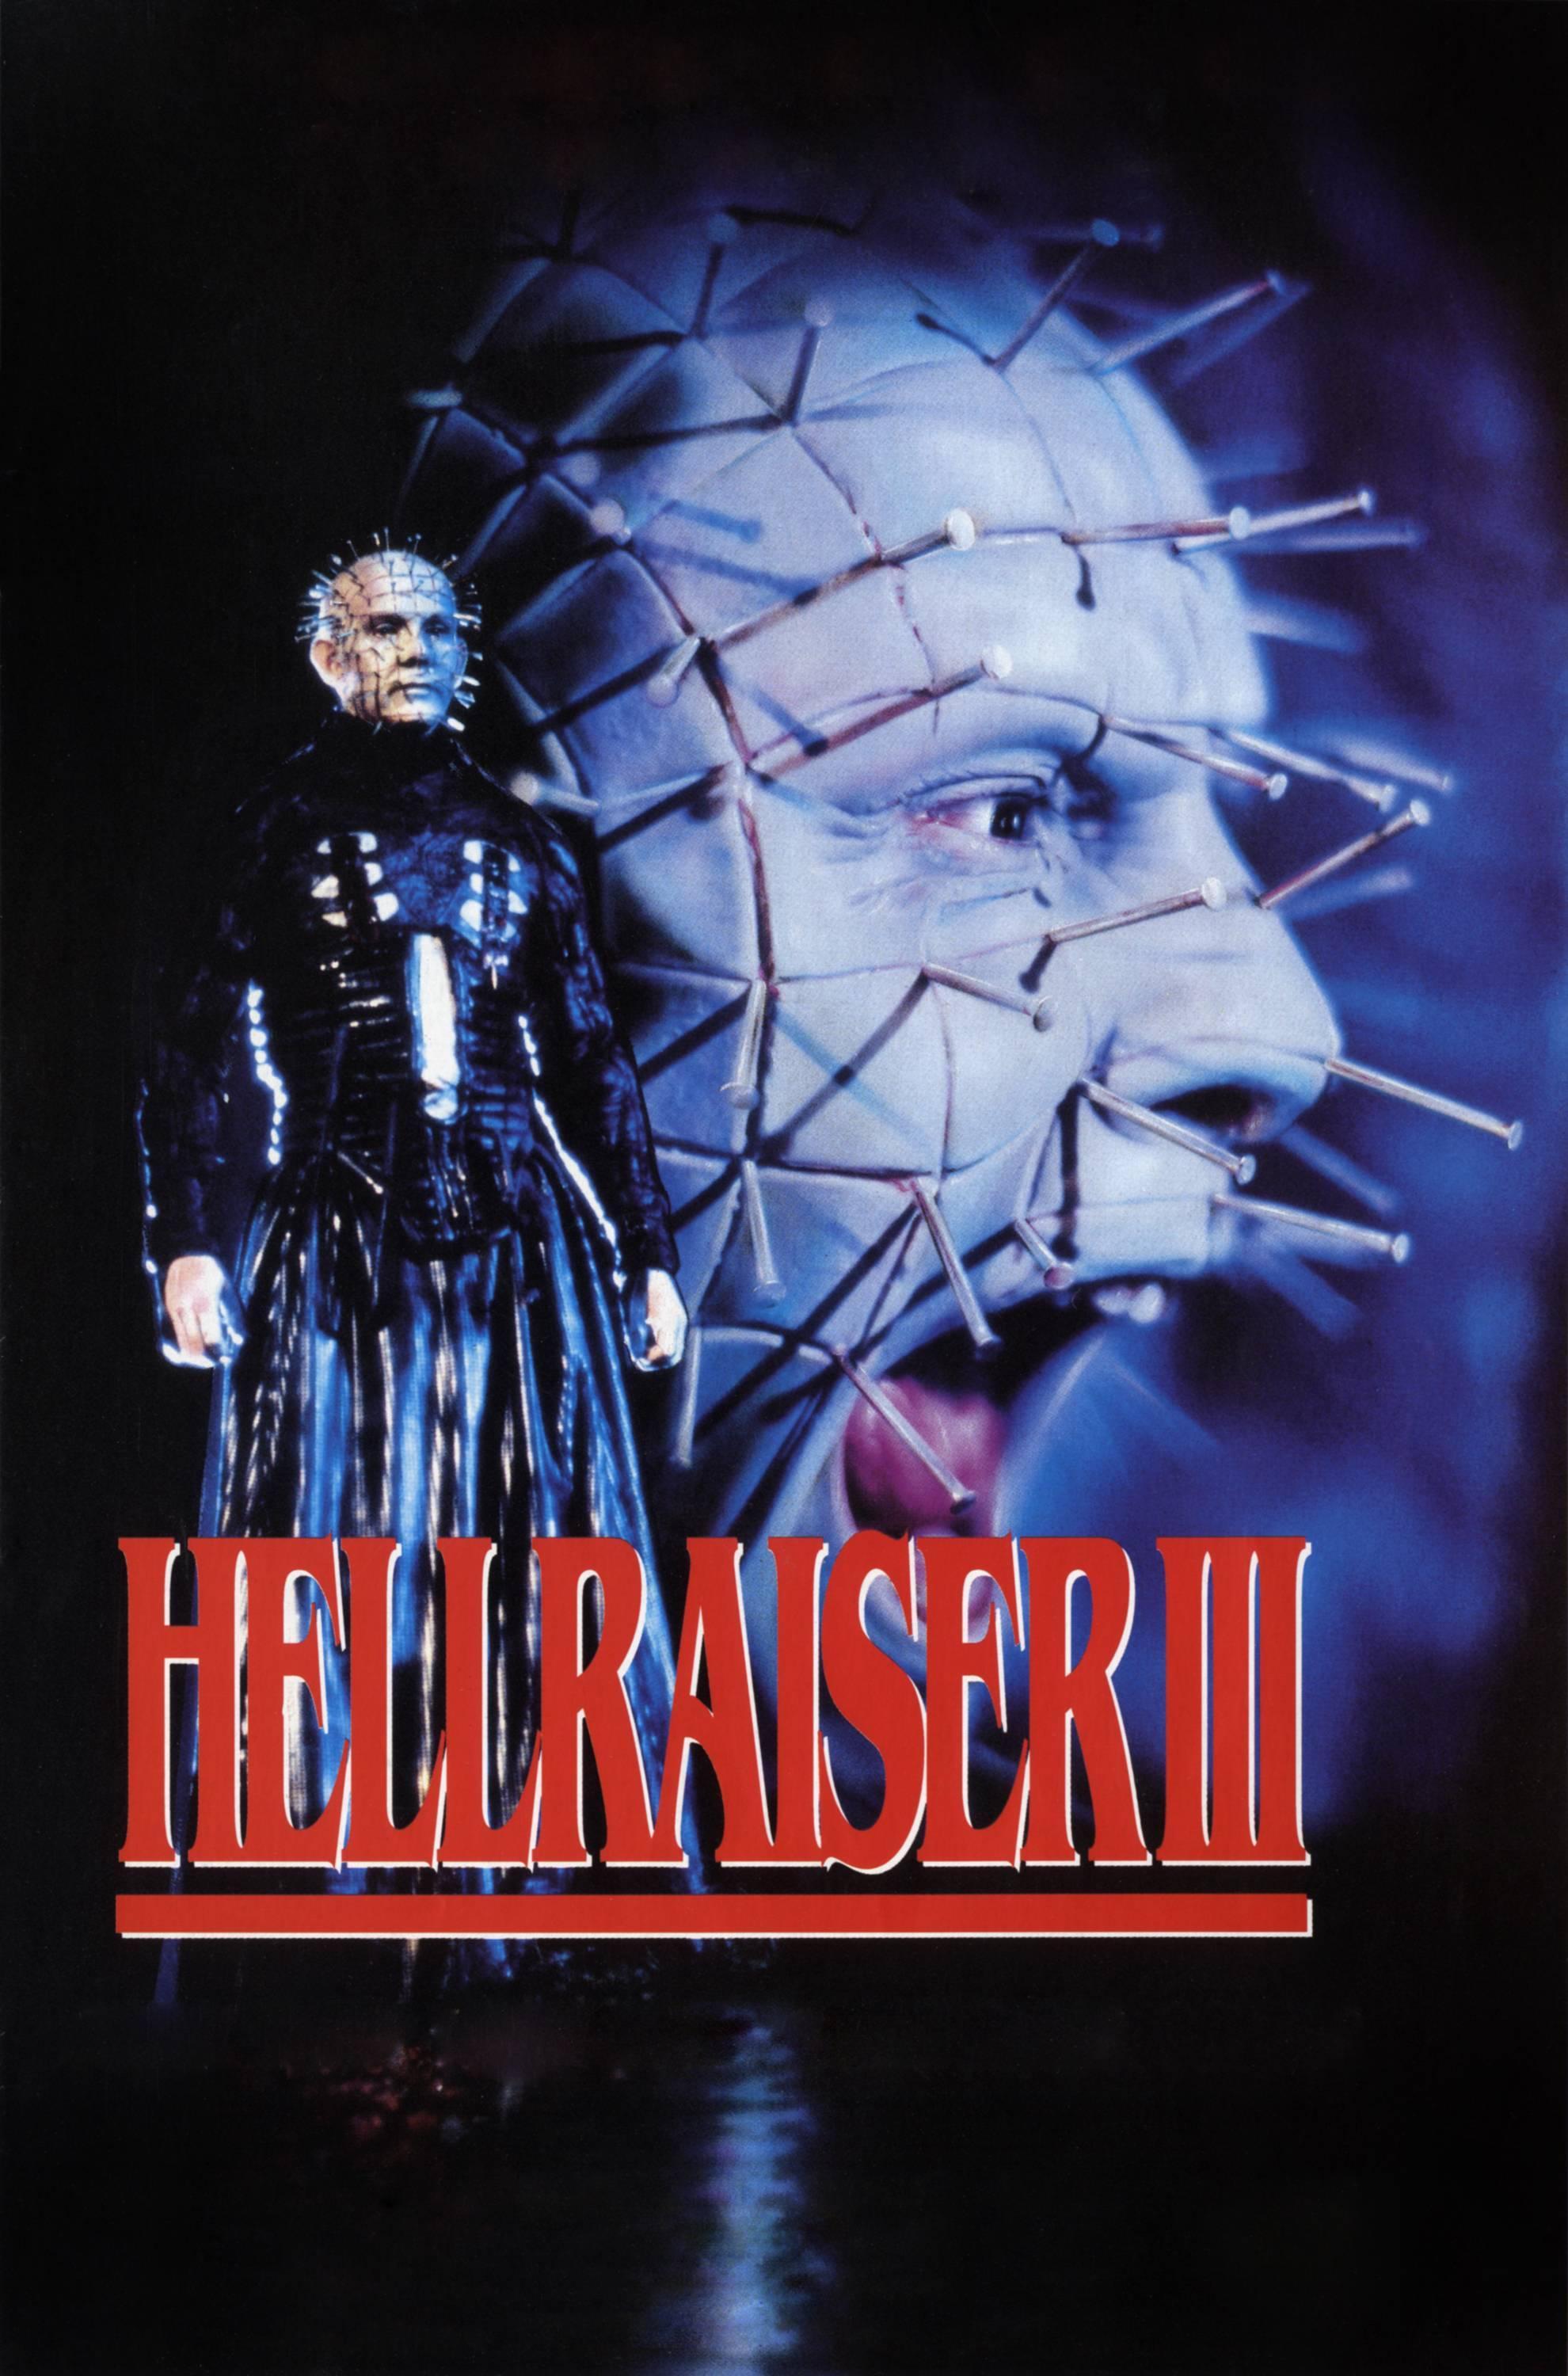 Постер фильма Восставший из ада 3: Ад на Земле | Hellraiser III: Hell on Earth